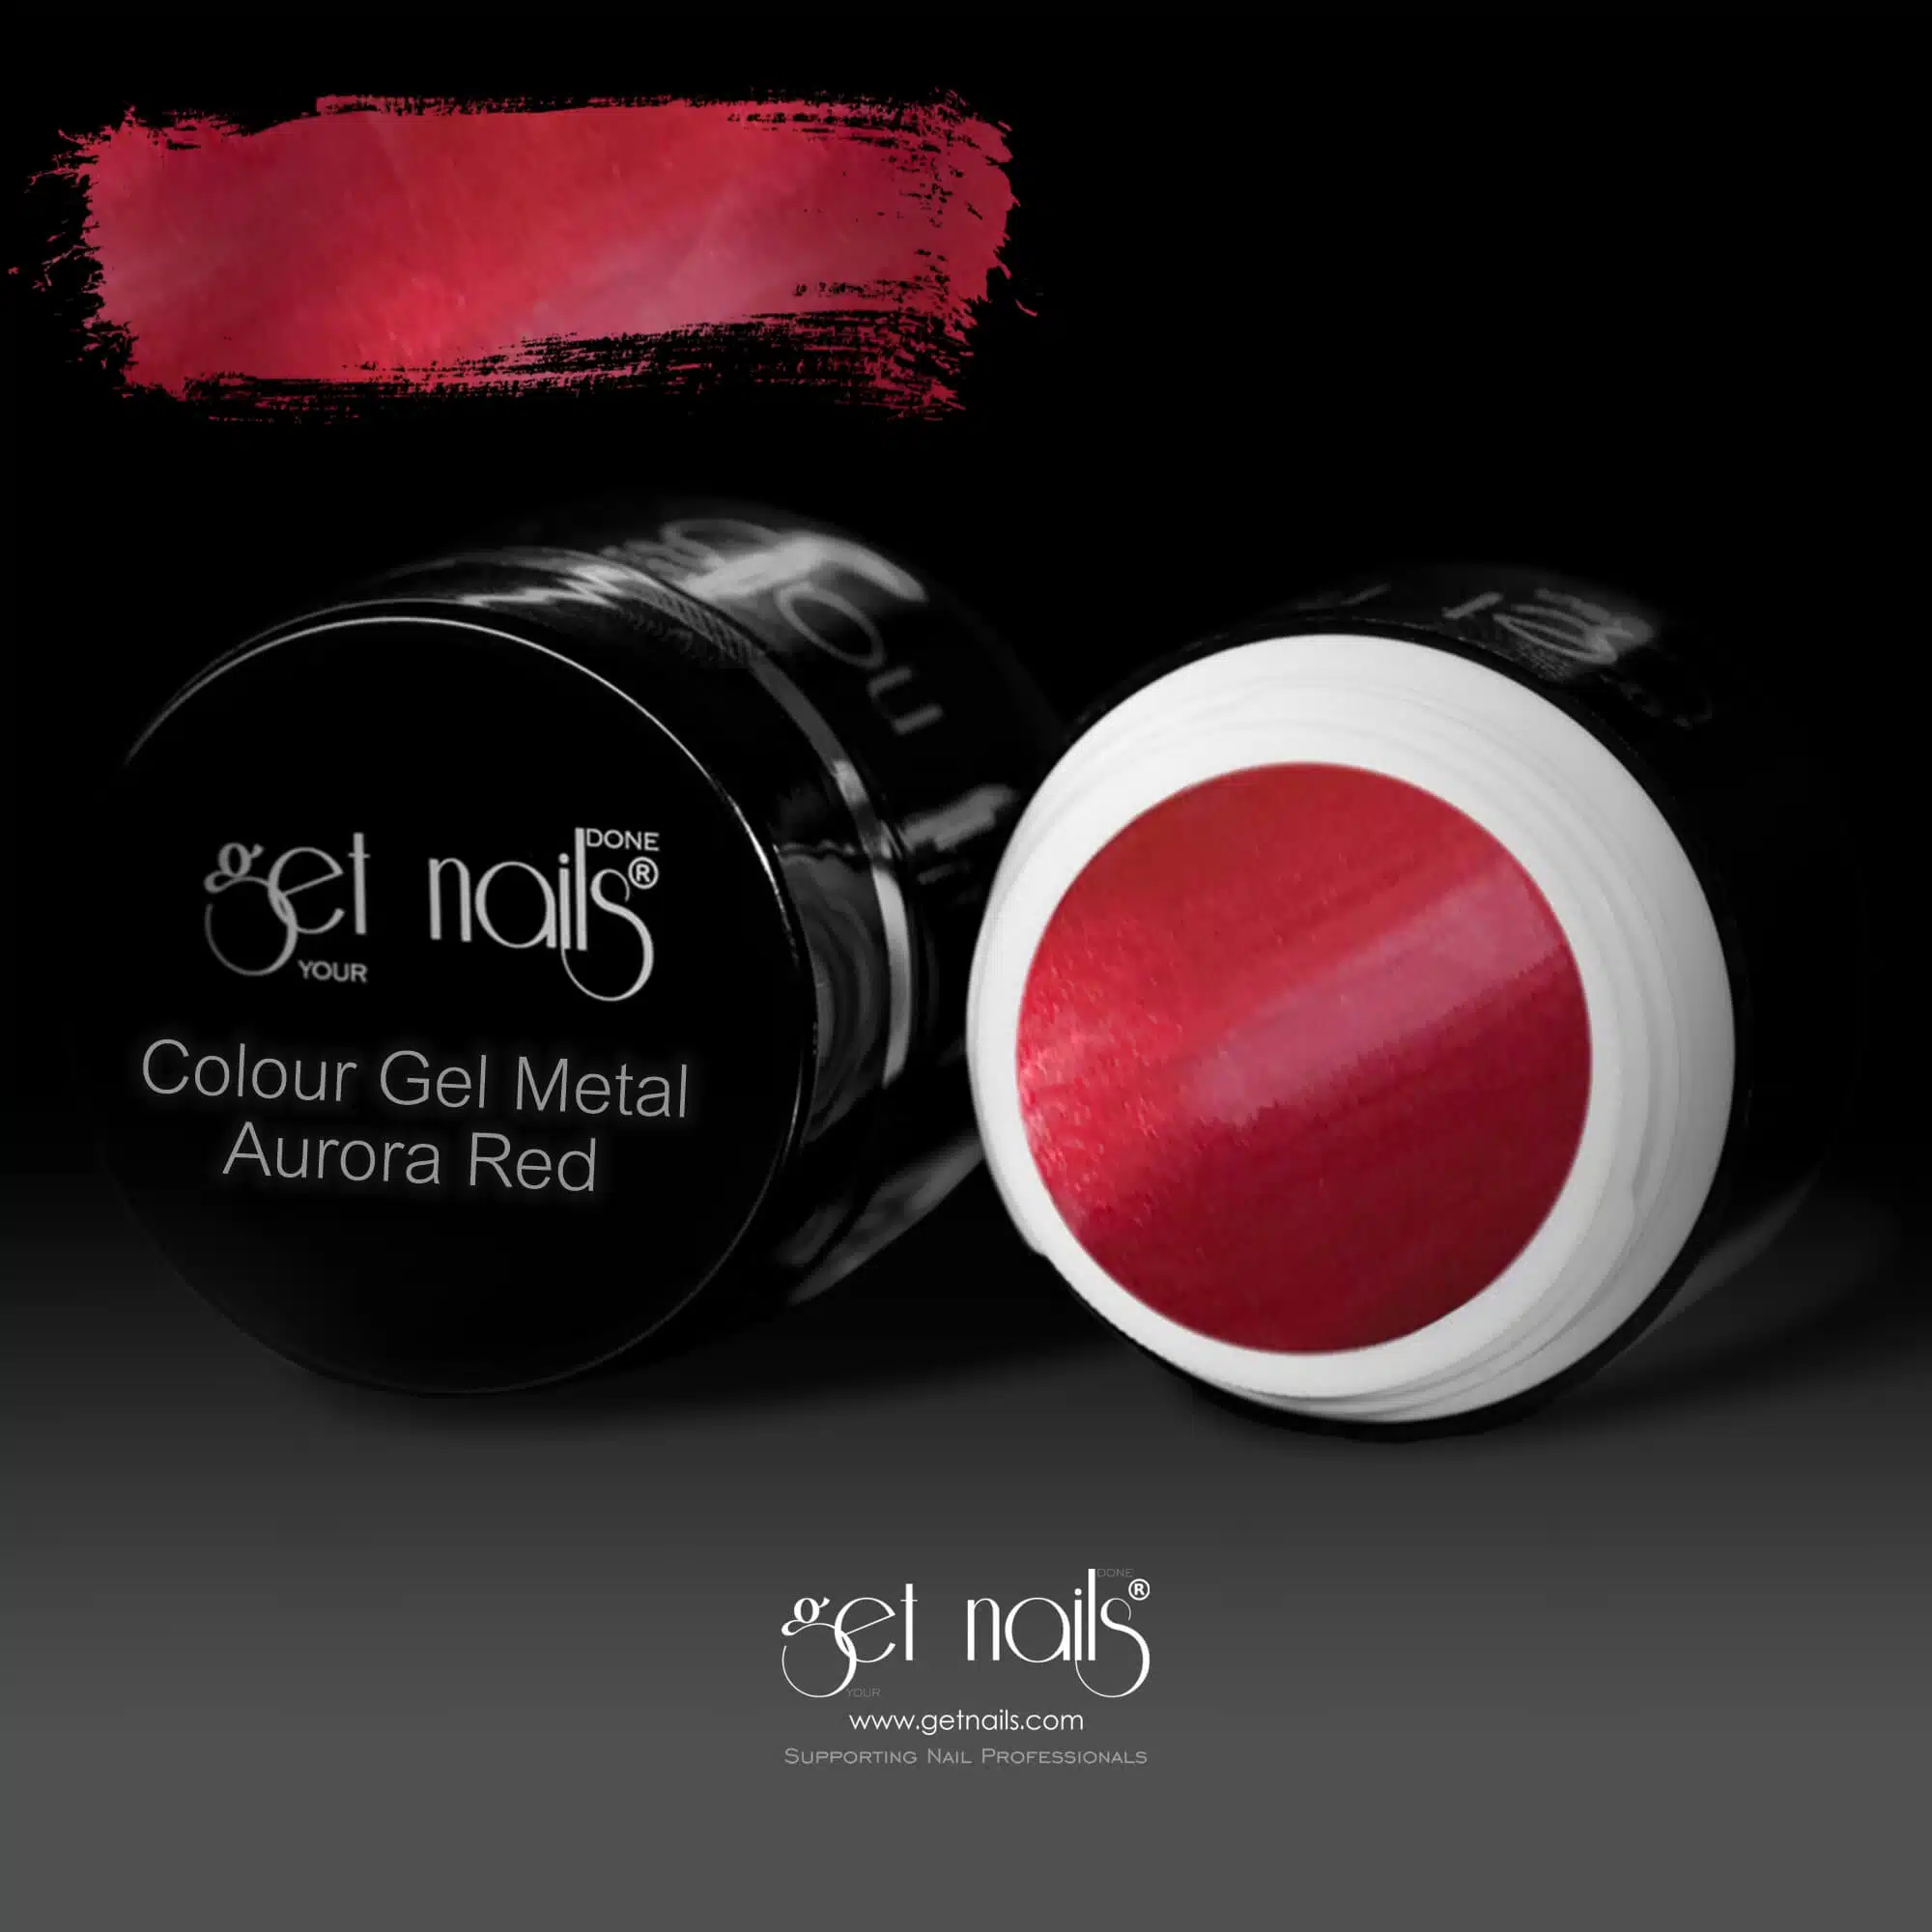 Get Nails Austria - Color Gel Metal Aurora Red 5g